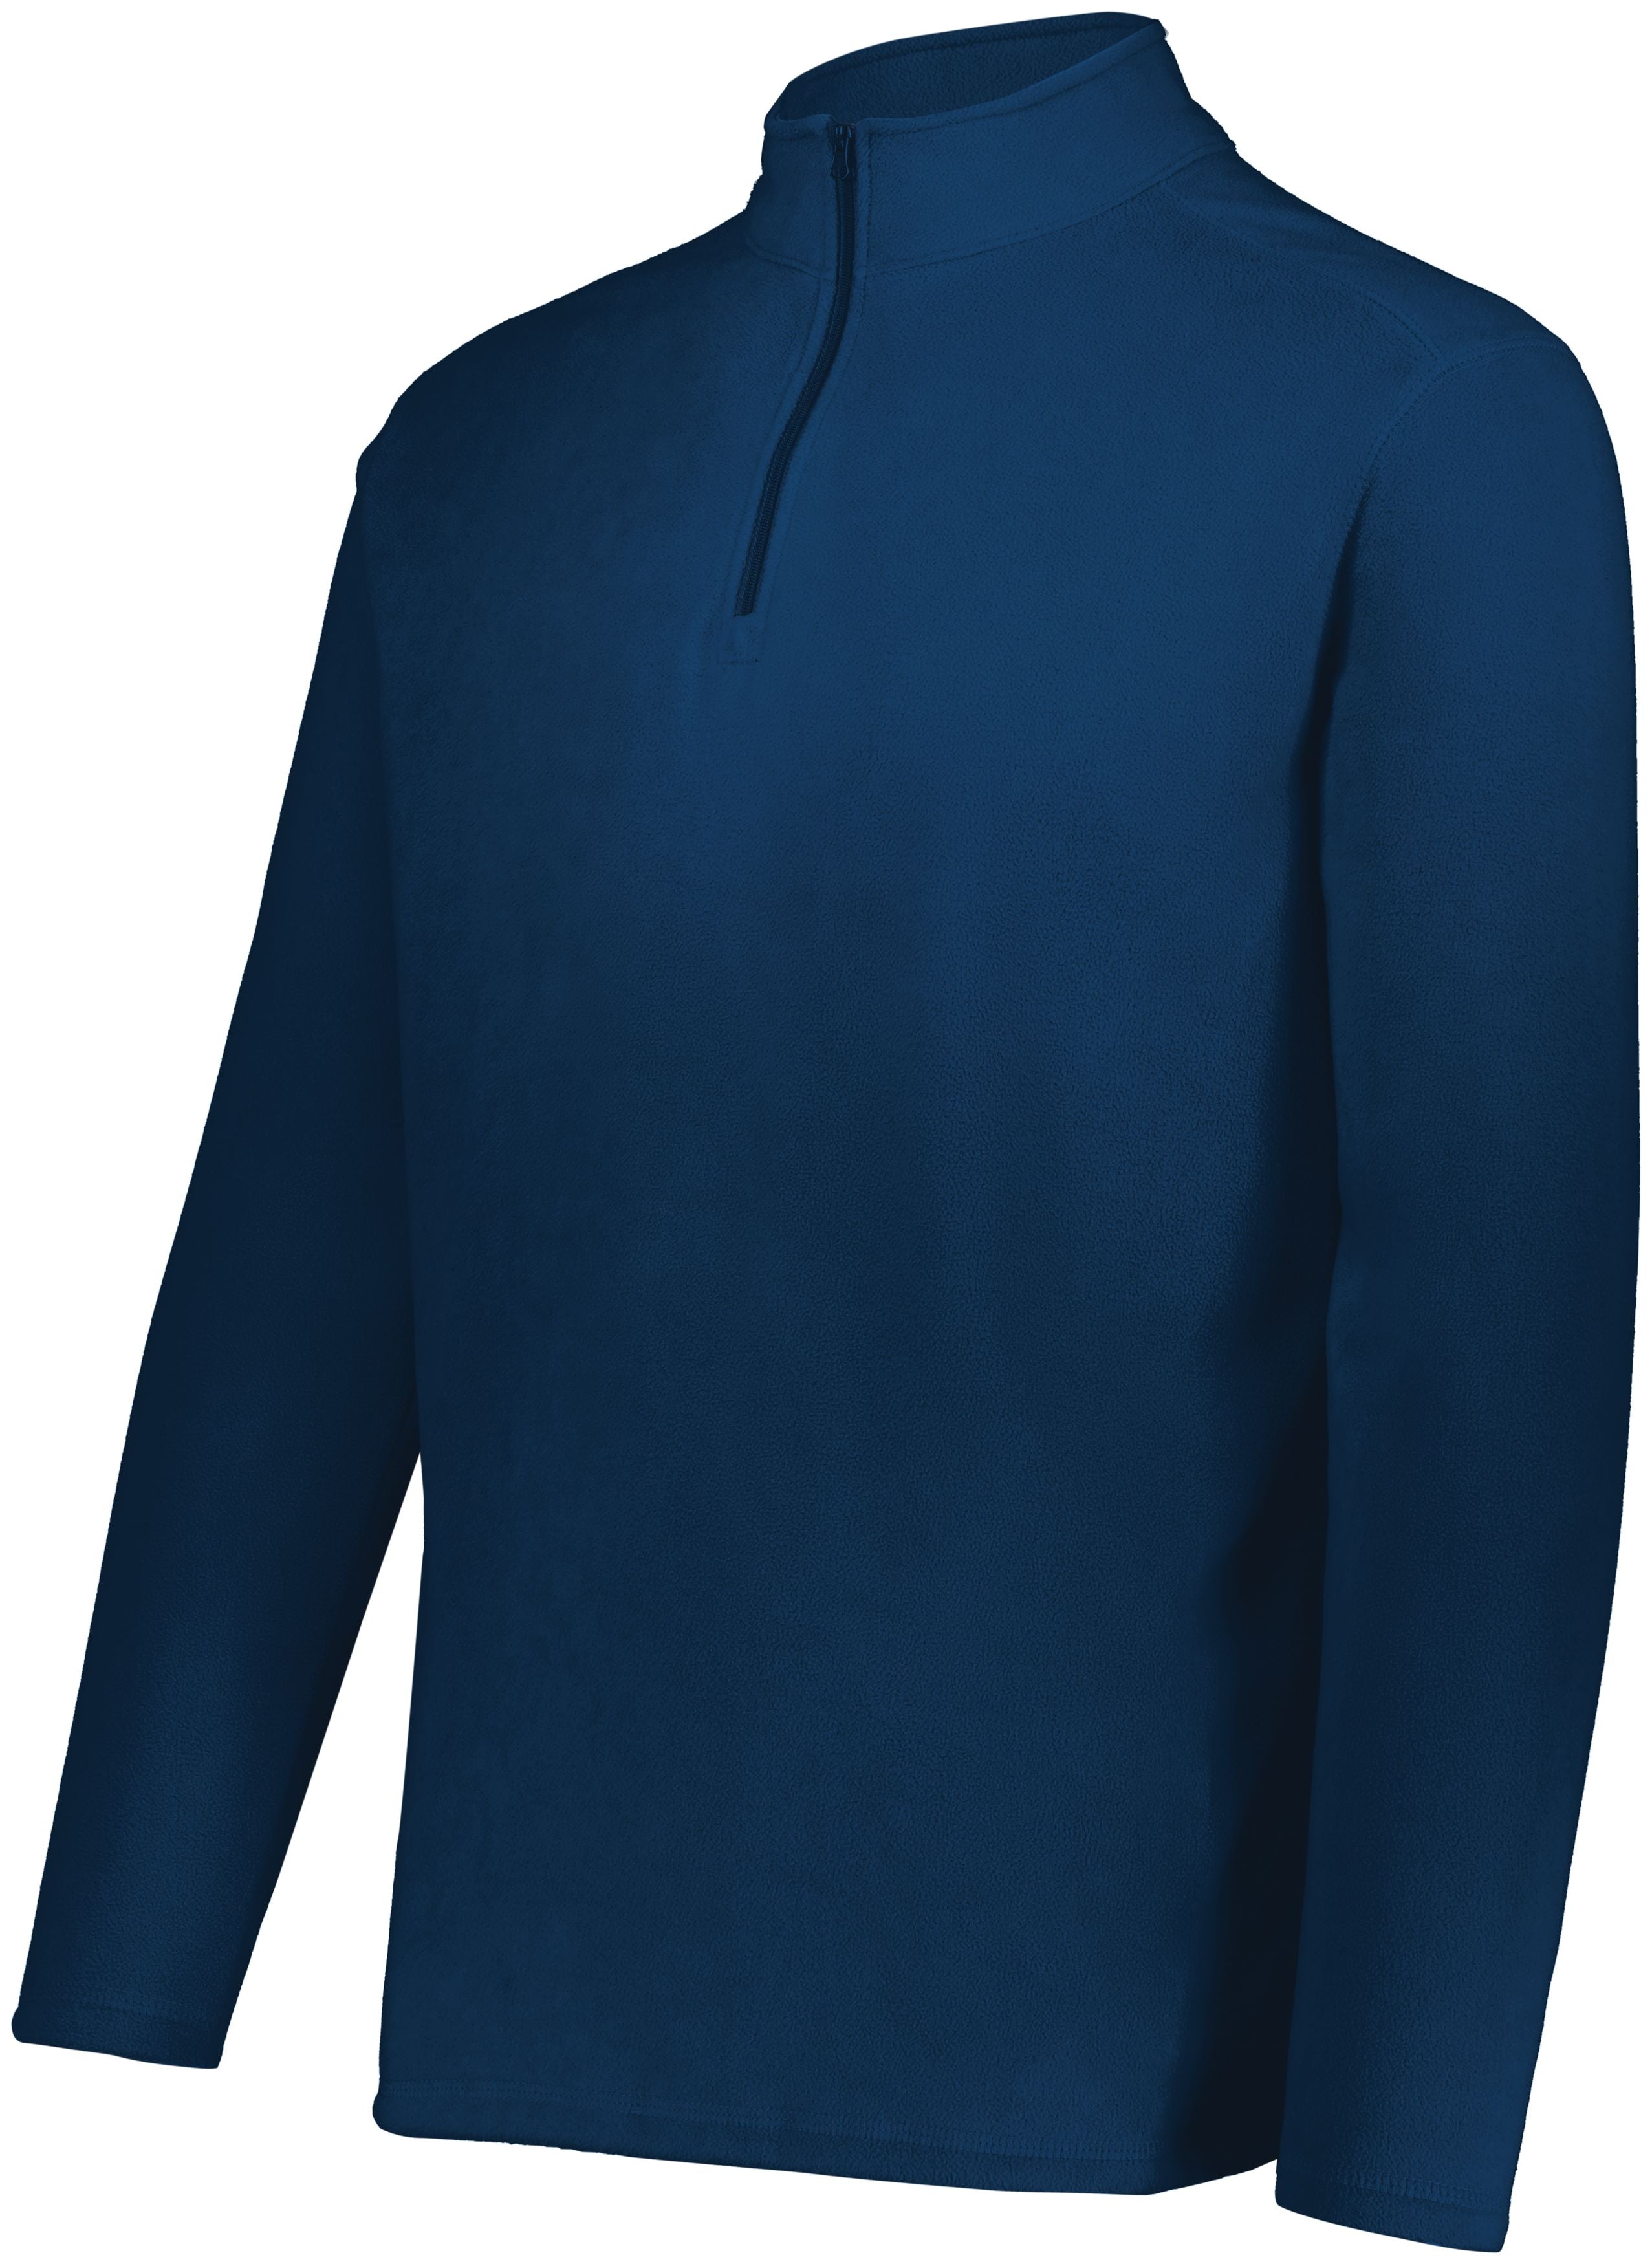 C3) 6863 Augusta Sportswear Micro-Lite Fleece 1/4 Zip Pullover - ROCKZONE AMERICAS